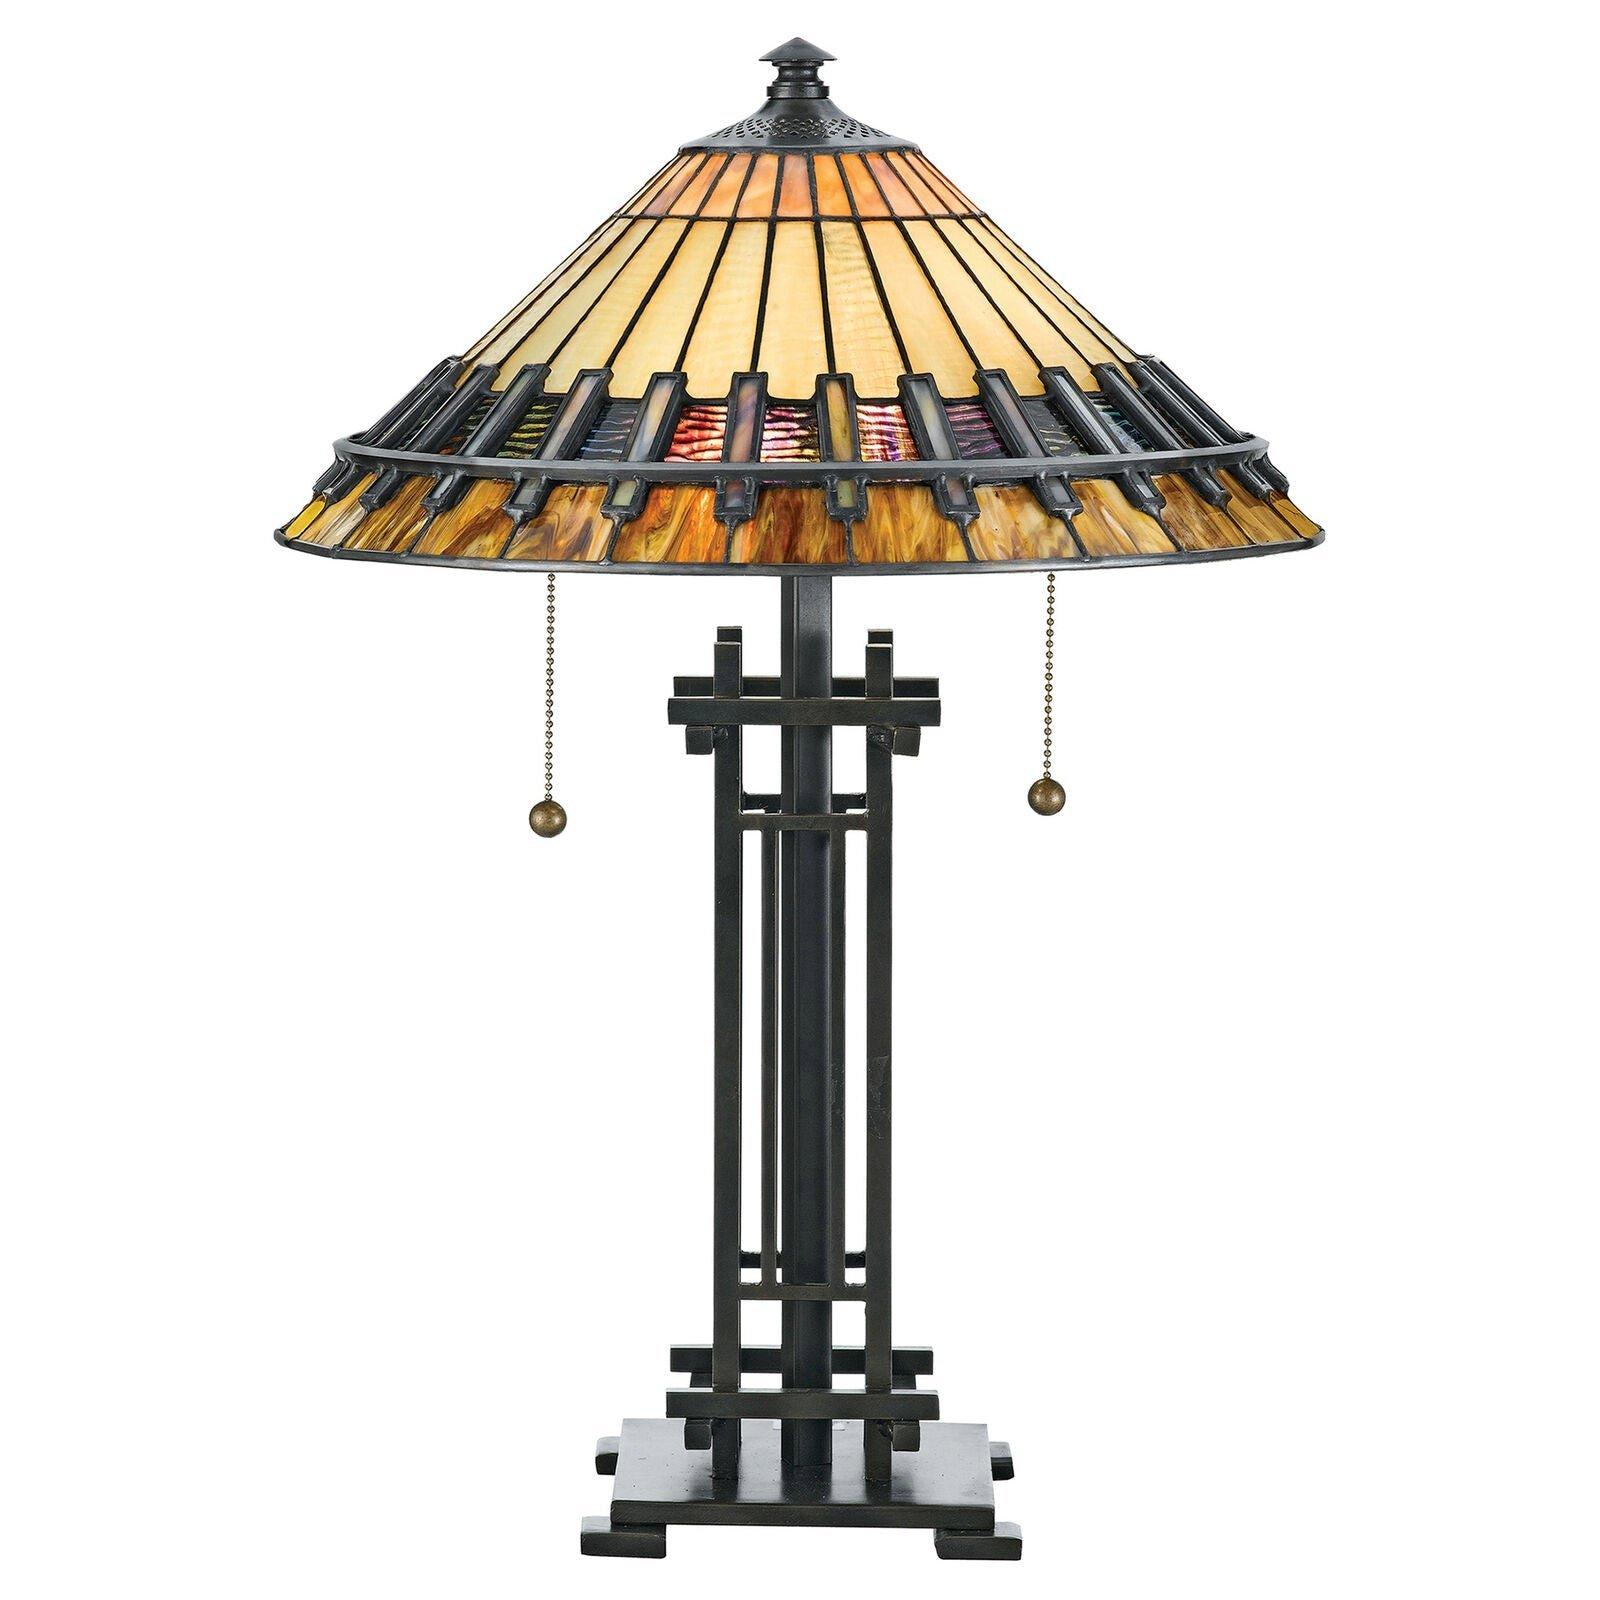 2 Bulb Table Lamp Tiffany Style Coloured Glass Vintage Bronze Base LED E27 60W